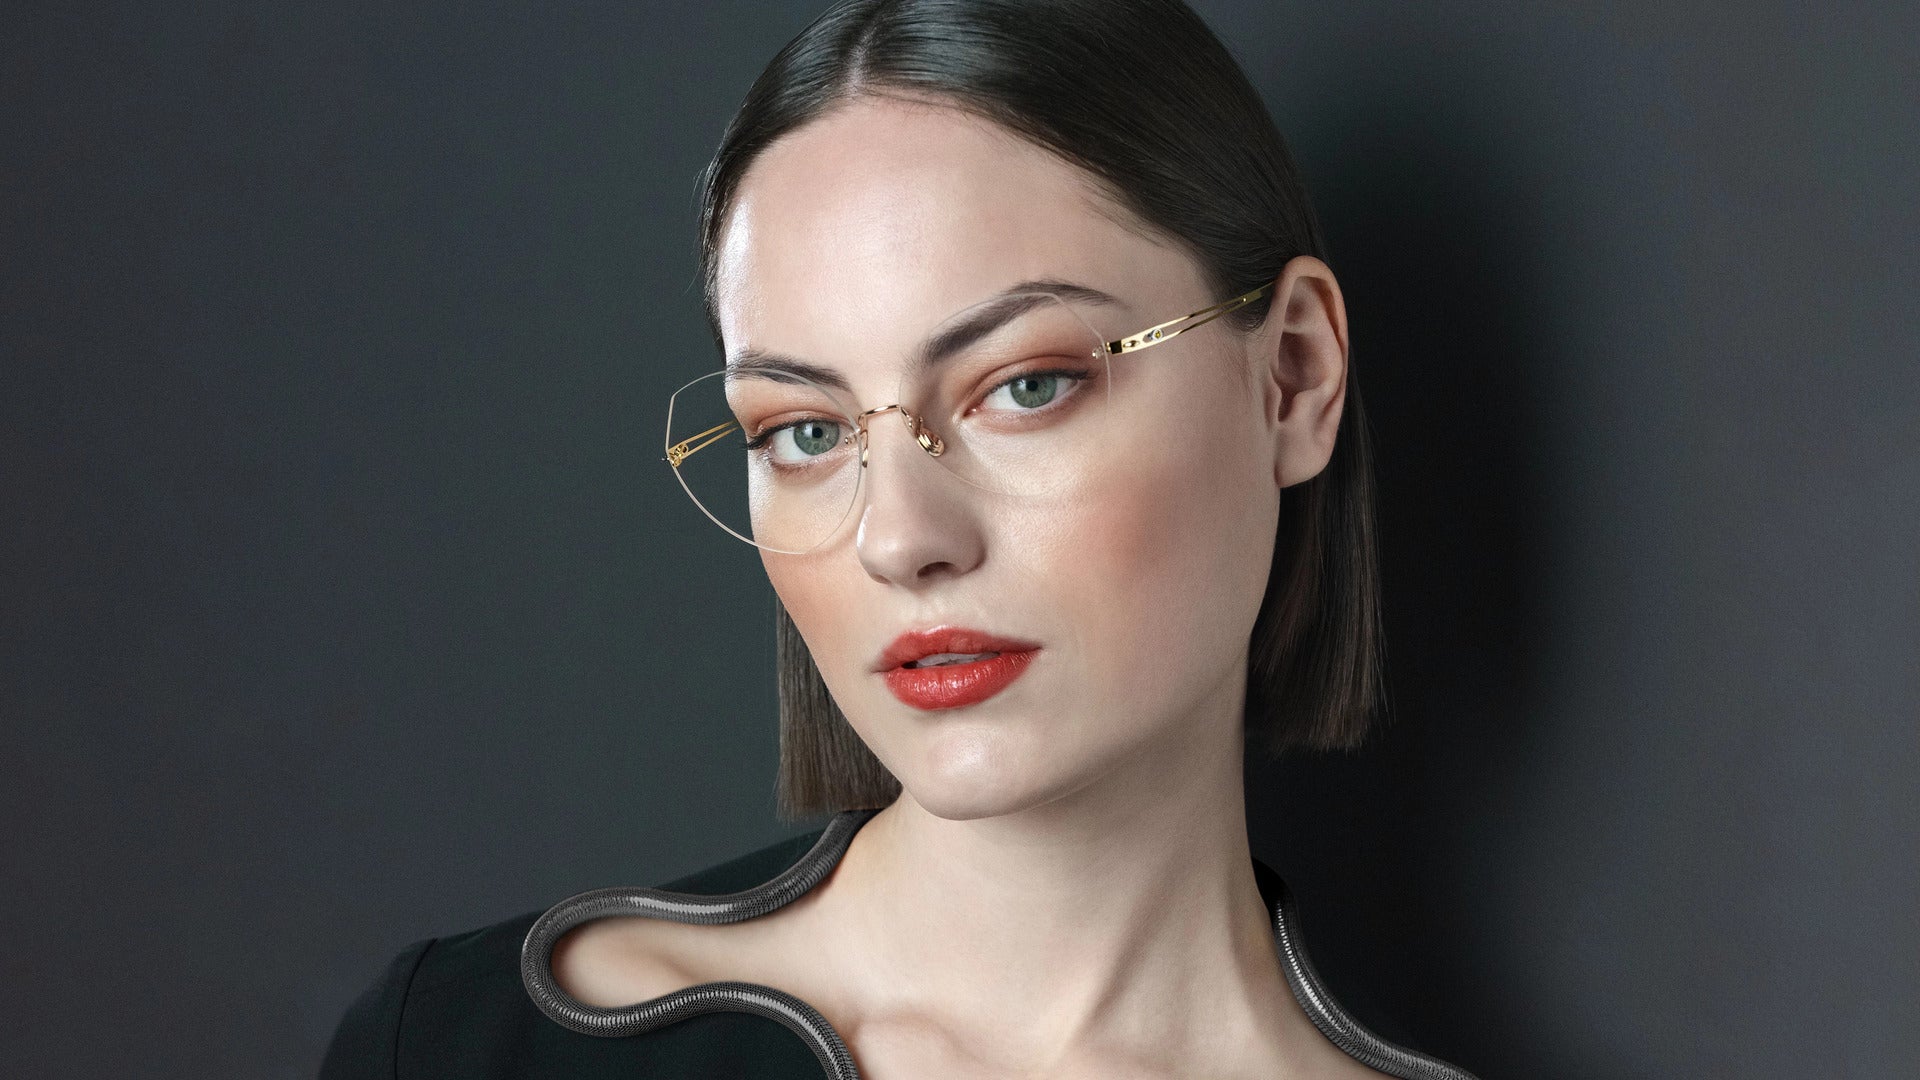 Danish eyewear brand Lindberg combine form and function